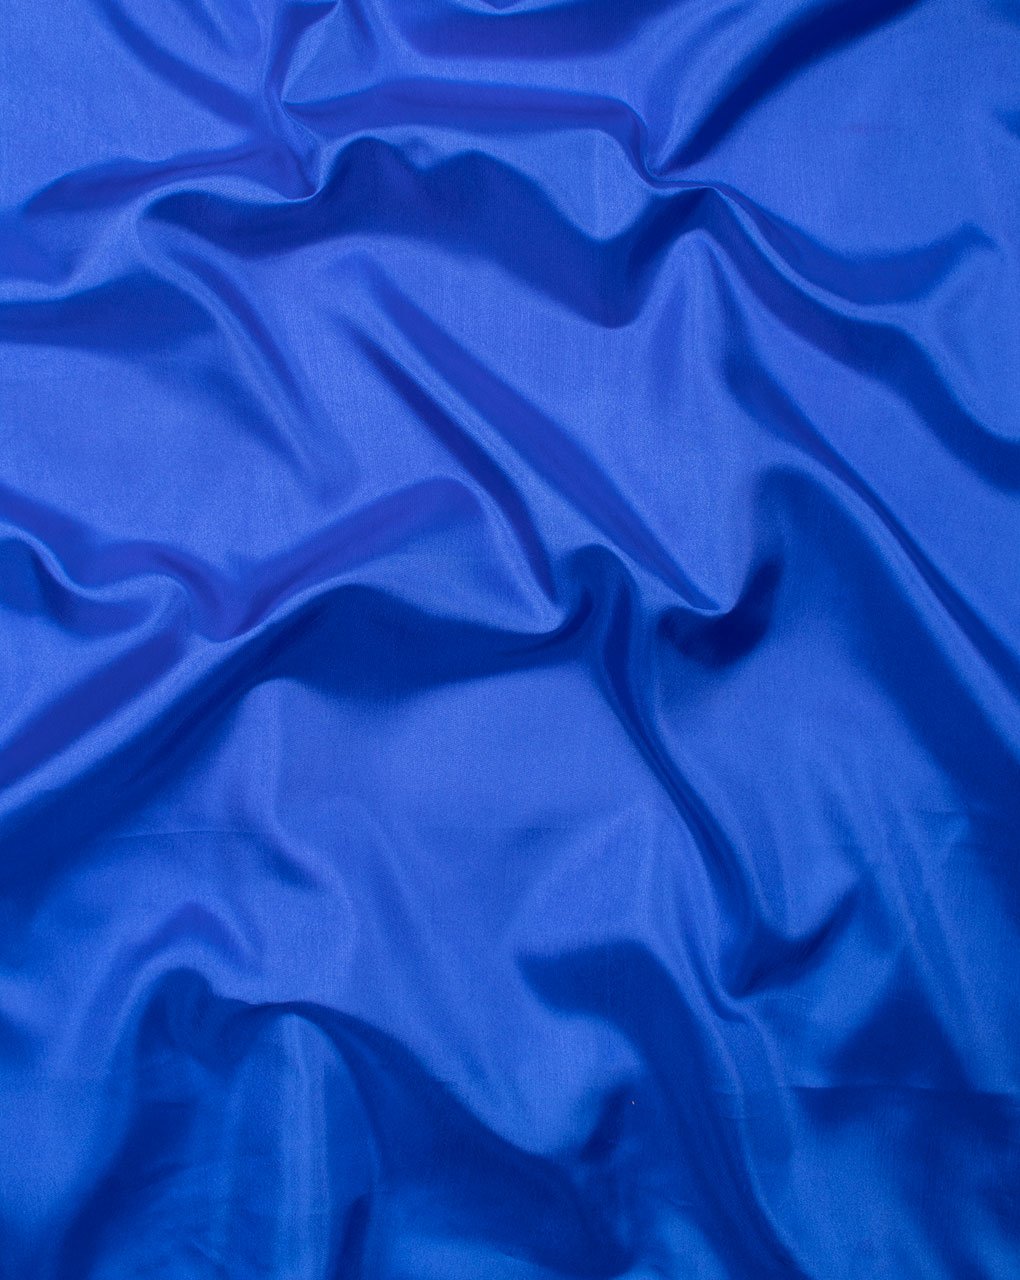 Royal Blue Plain Paper Silk Fabric - Fabriclore.com